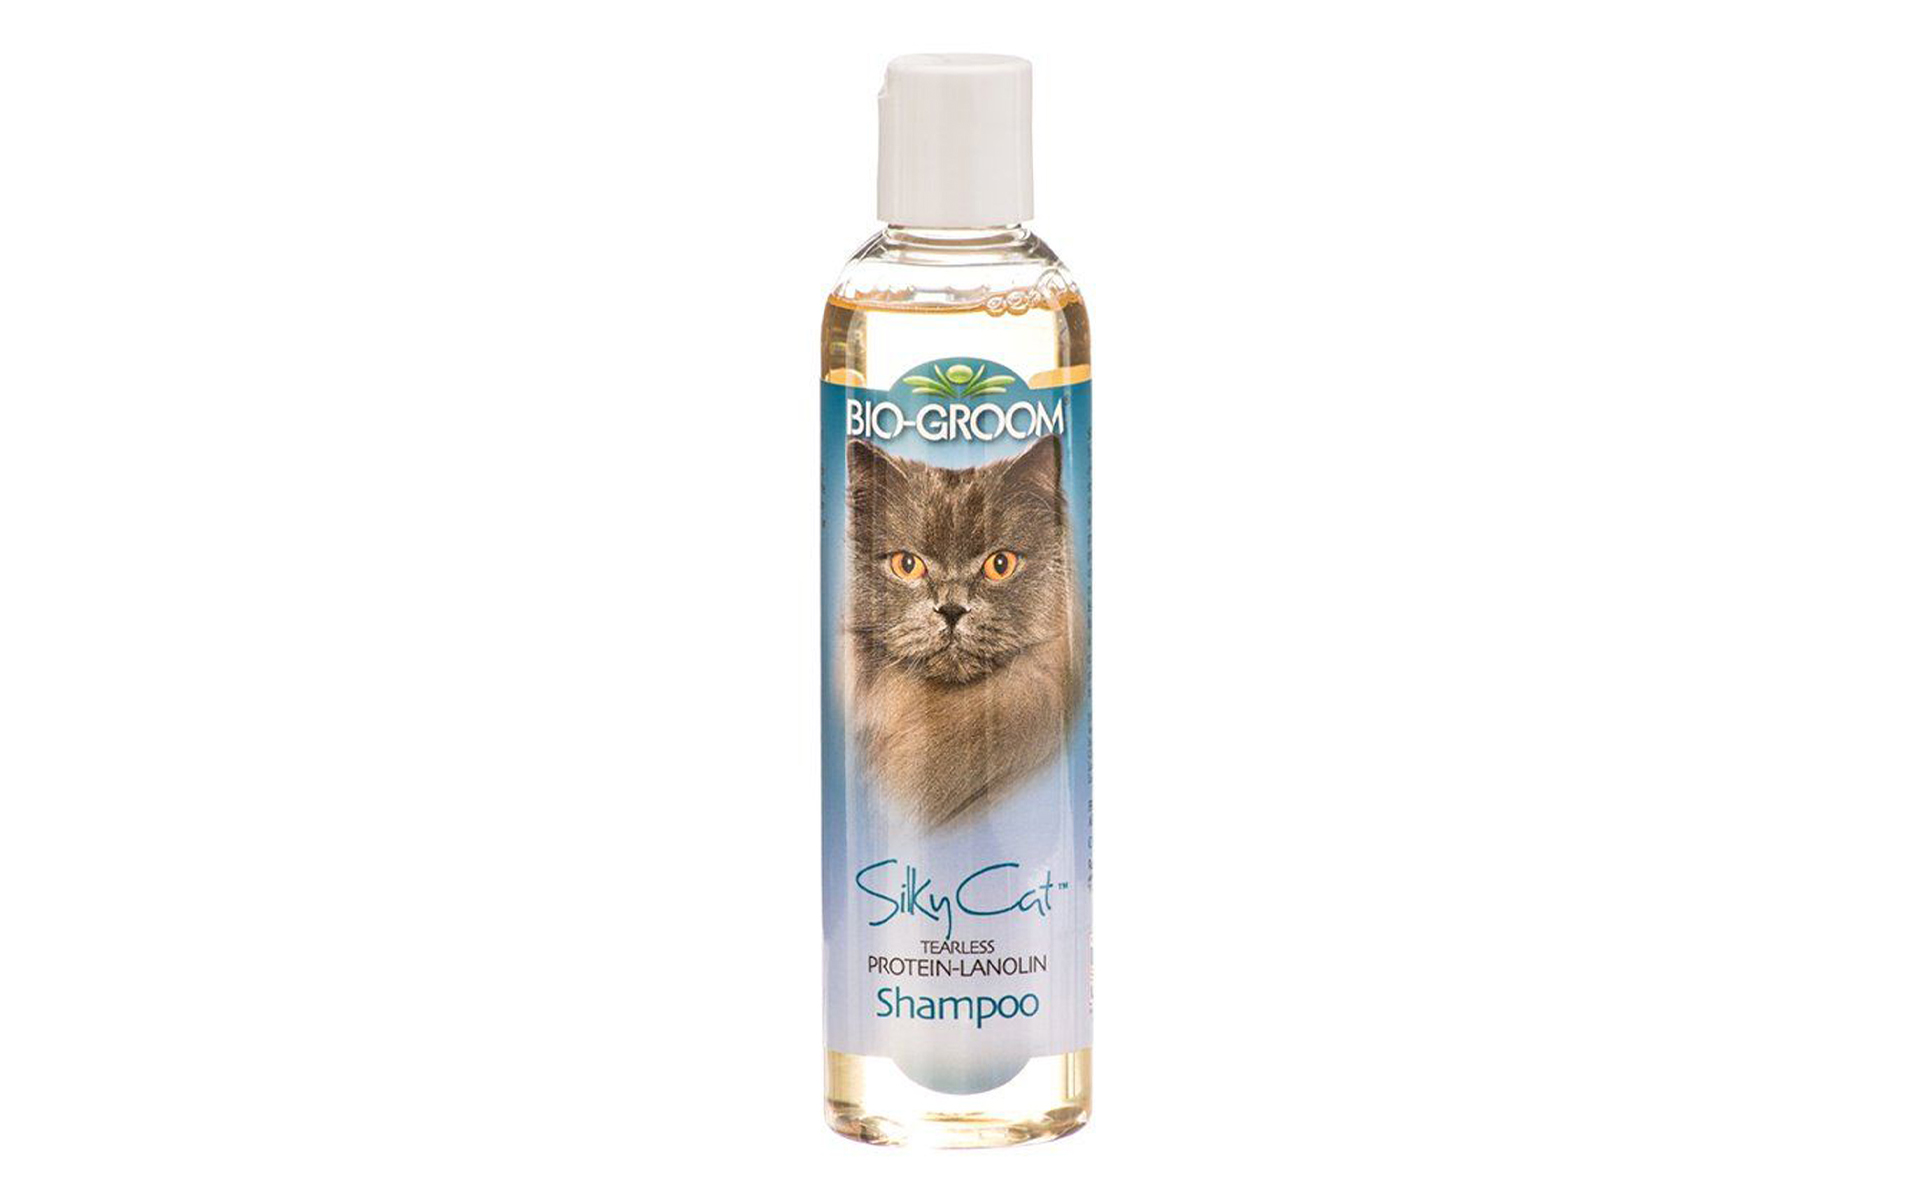 Silky Cat Tearless Protein & Lanolin Shampoo, 8 oz